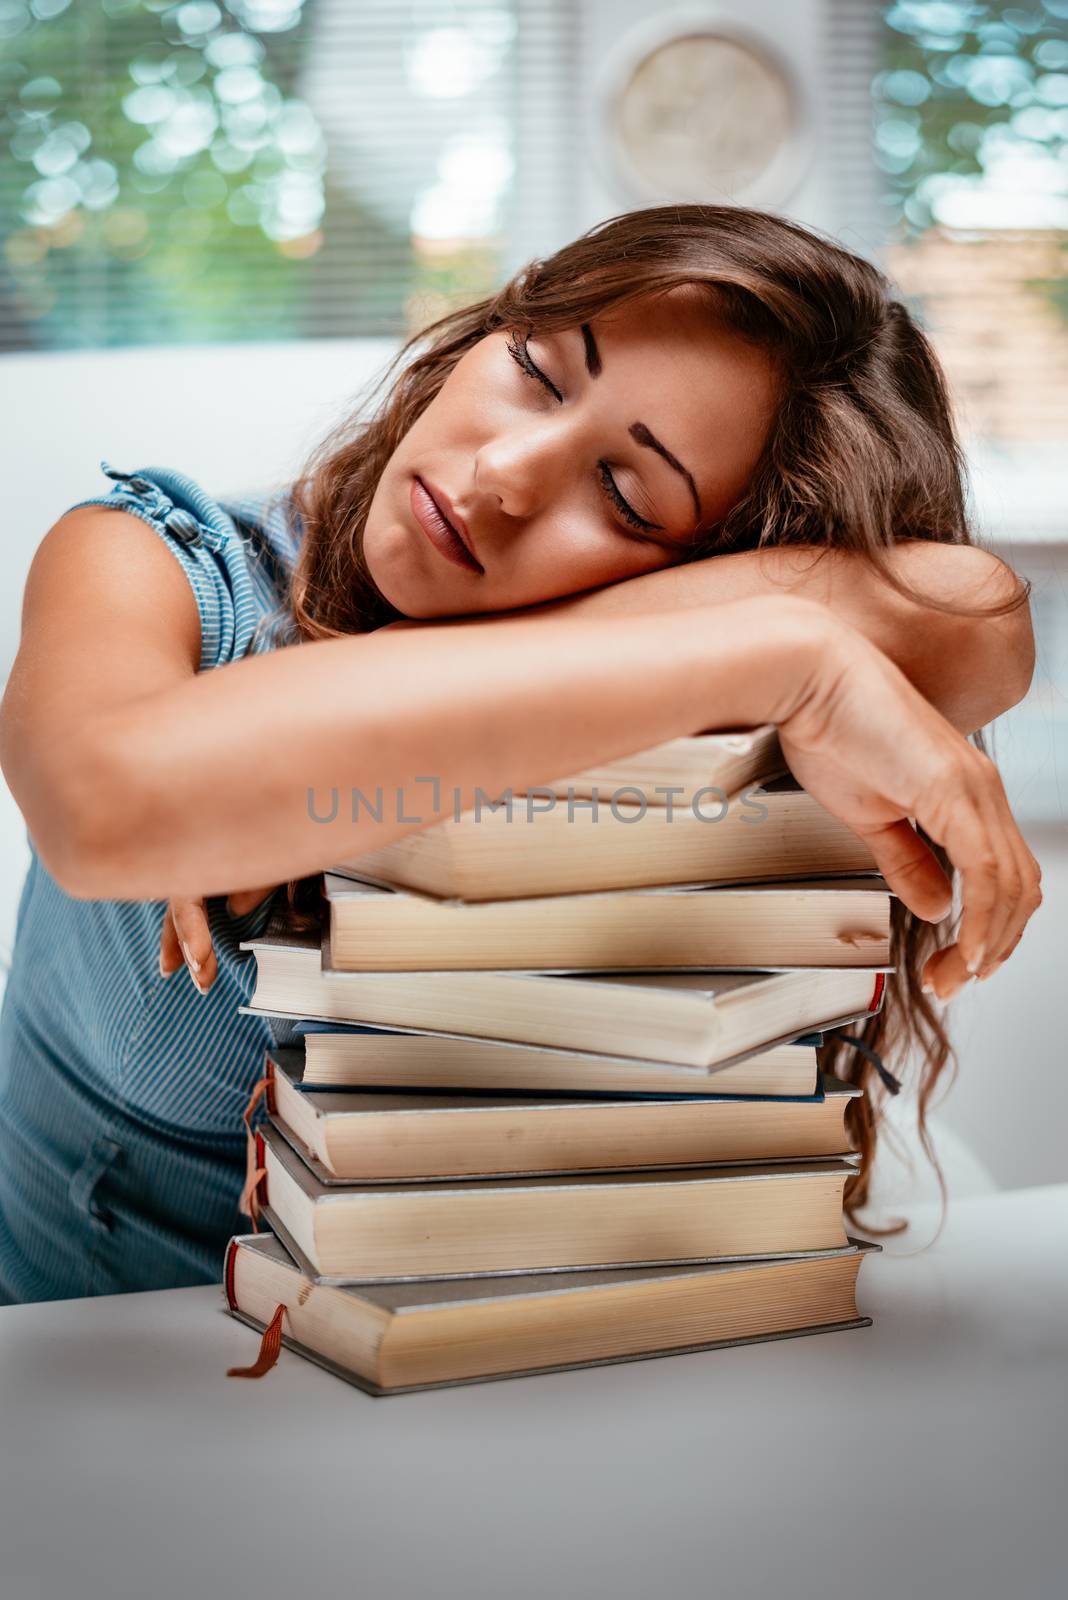 Sleeping Student Girl by MilanMarkovic78